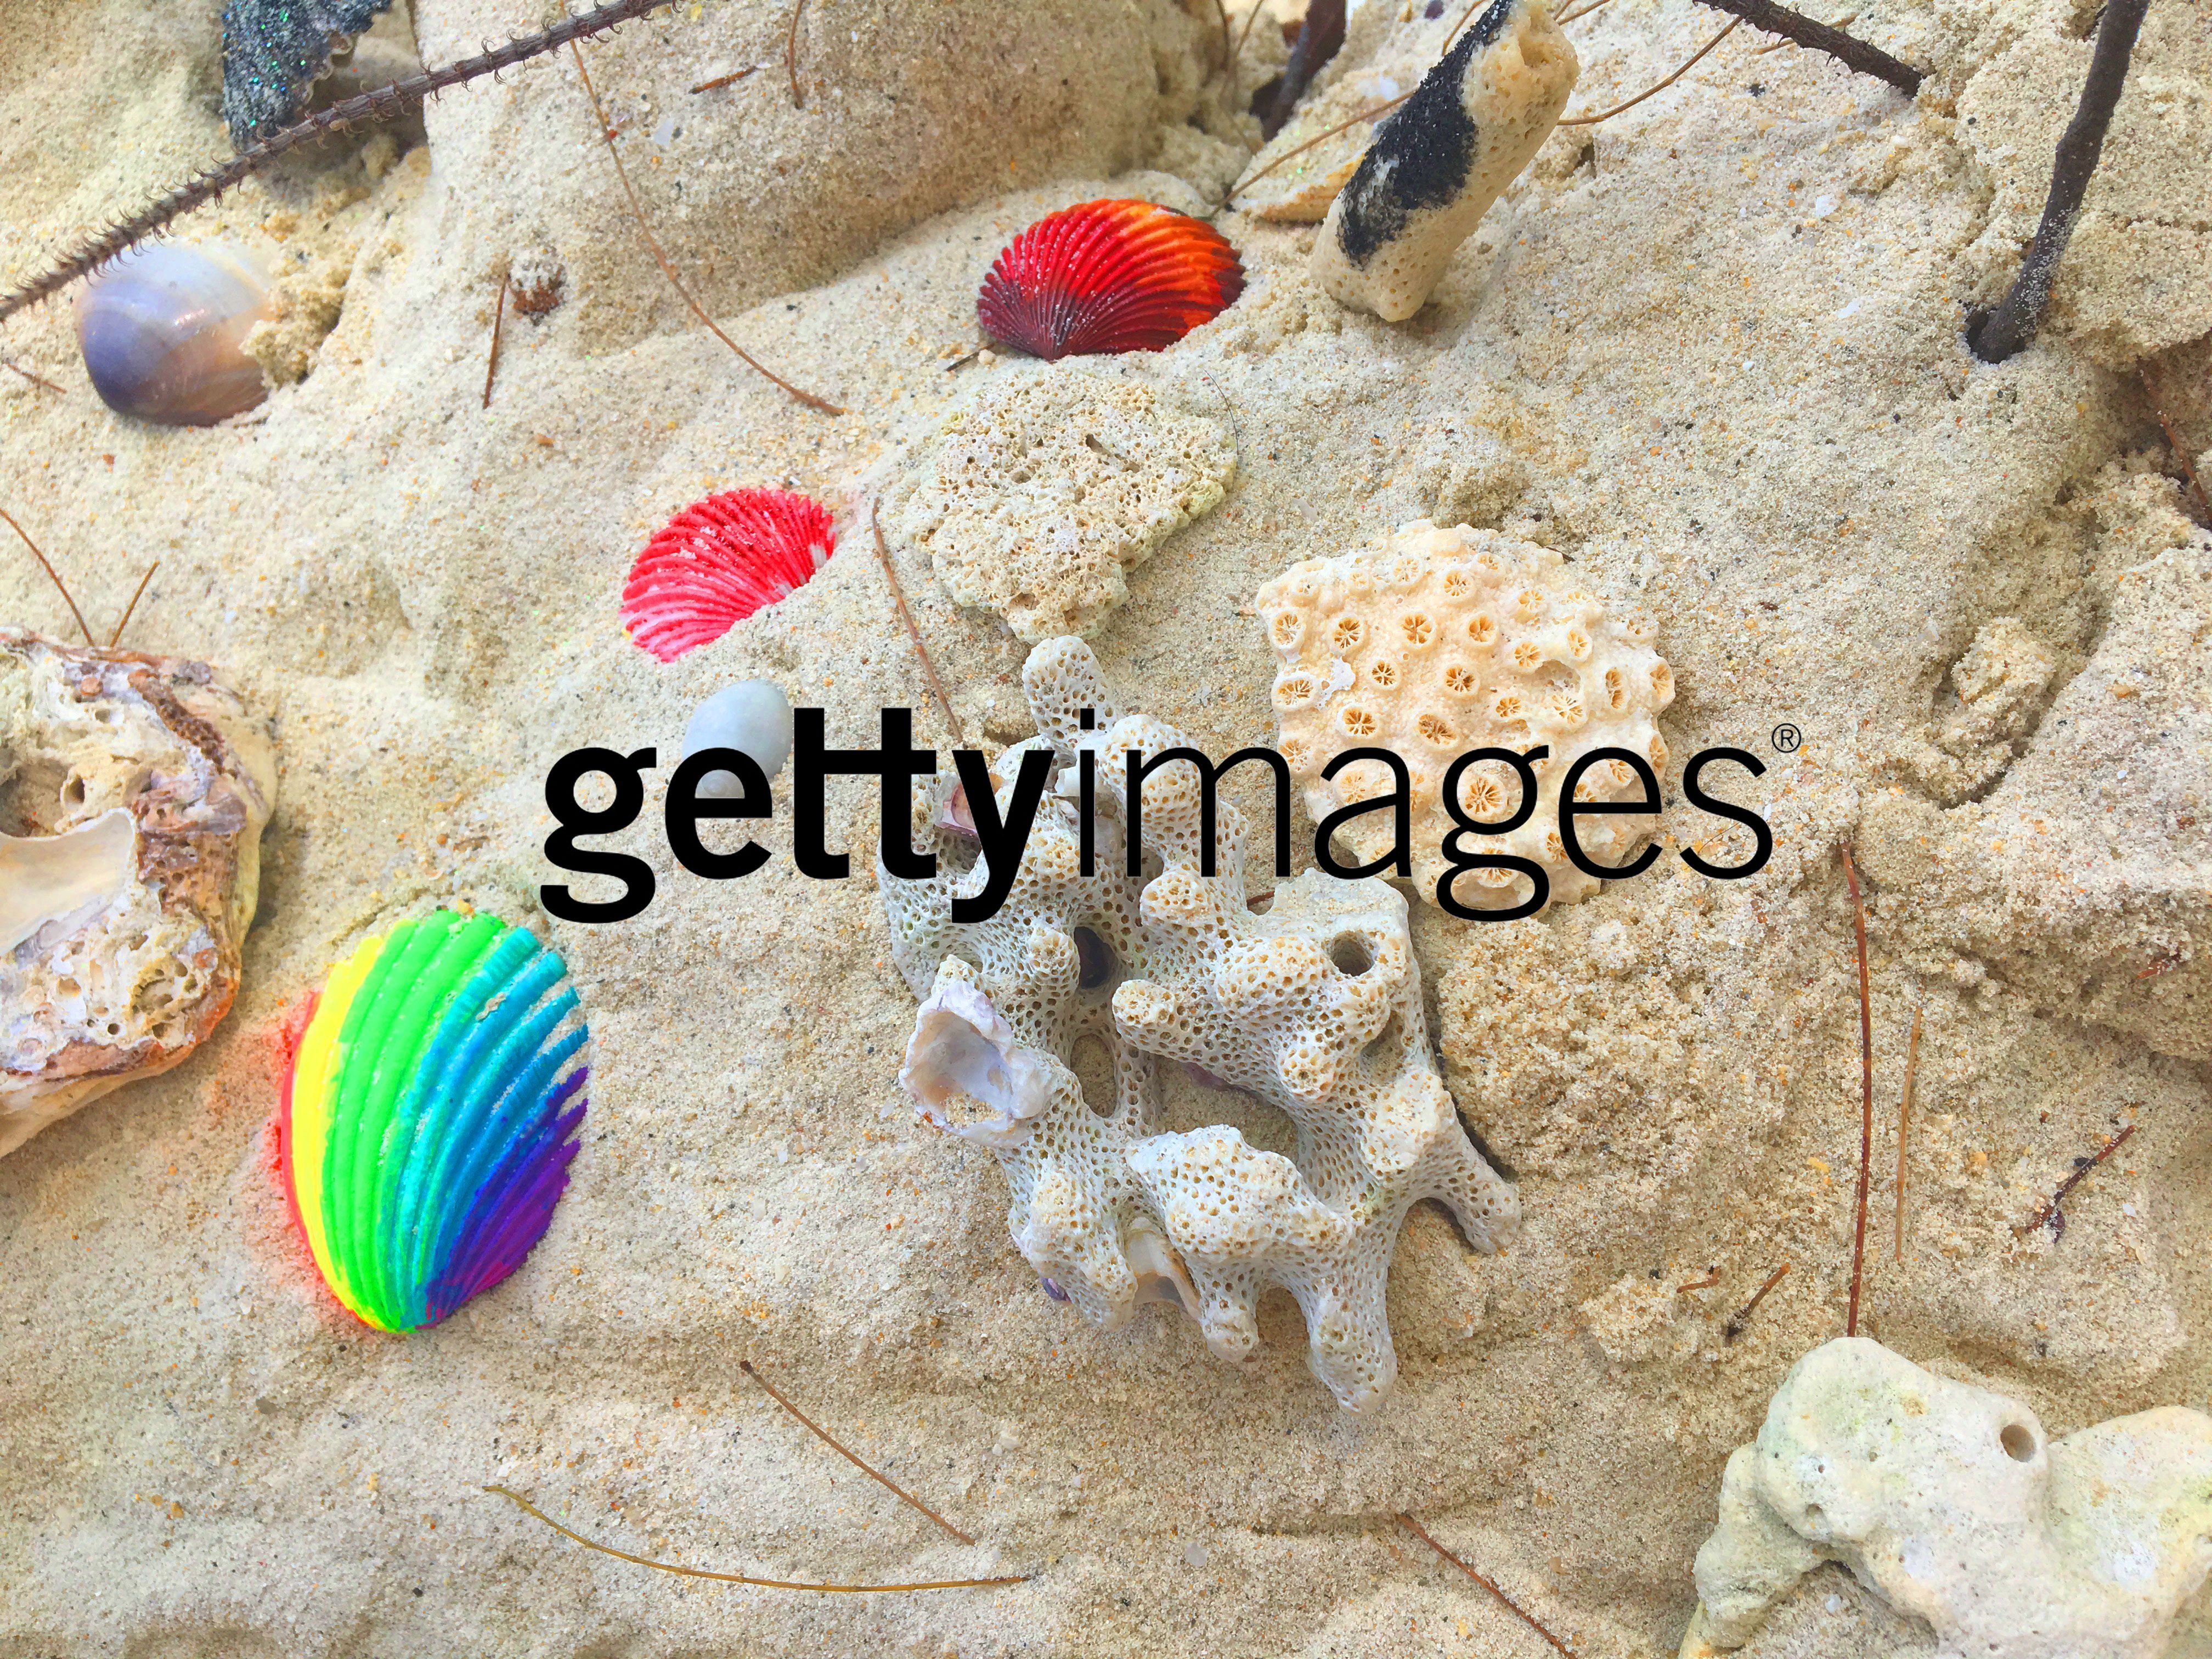 Getty Images Watermark Remover | Zdarma ke stažení.